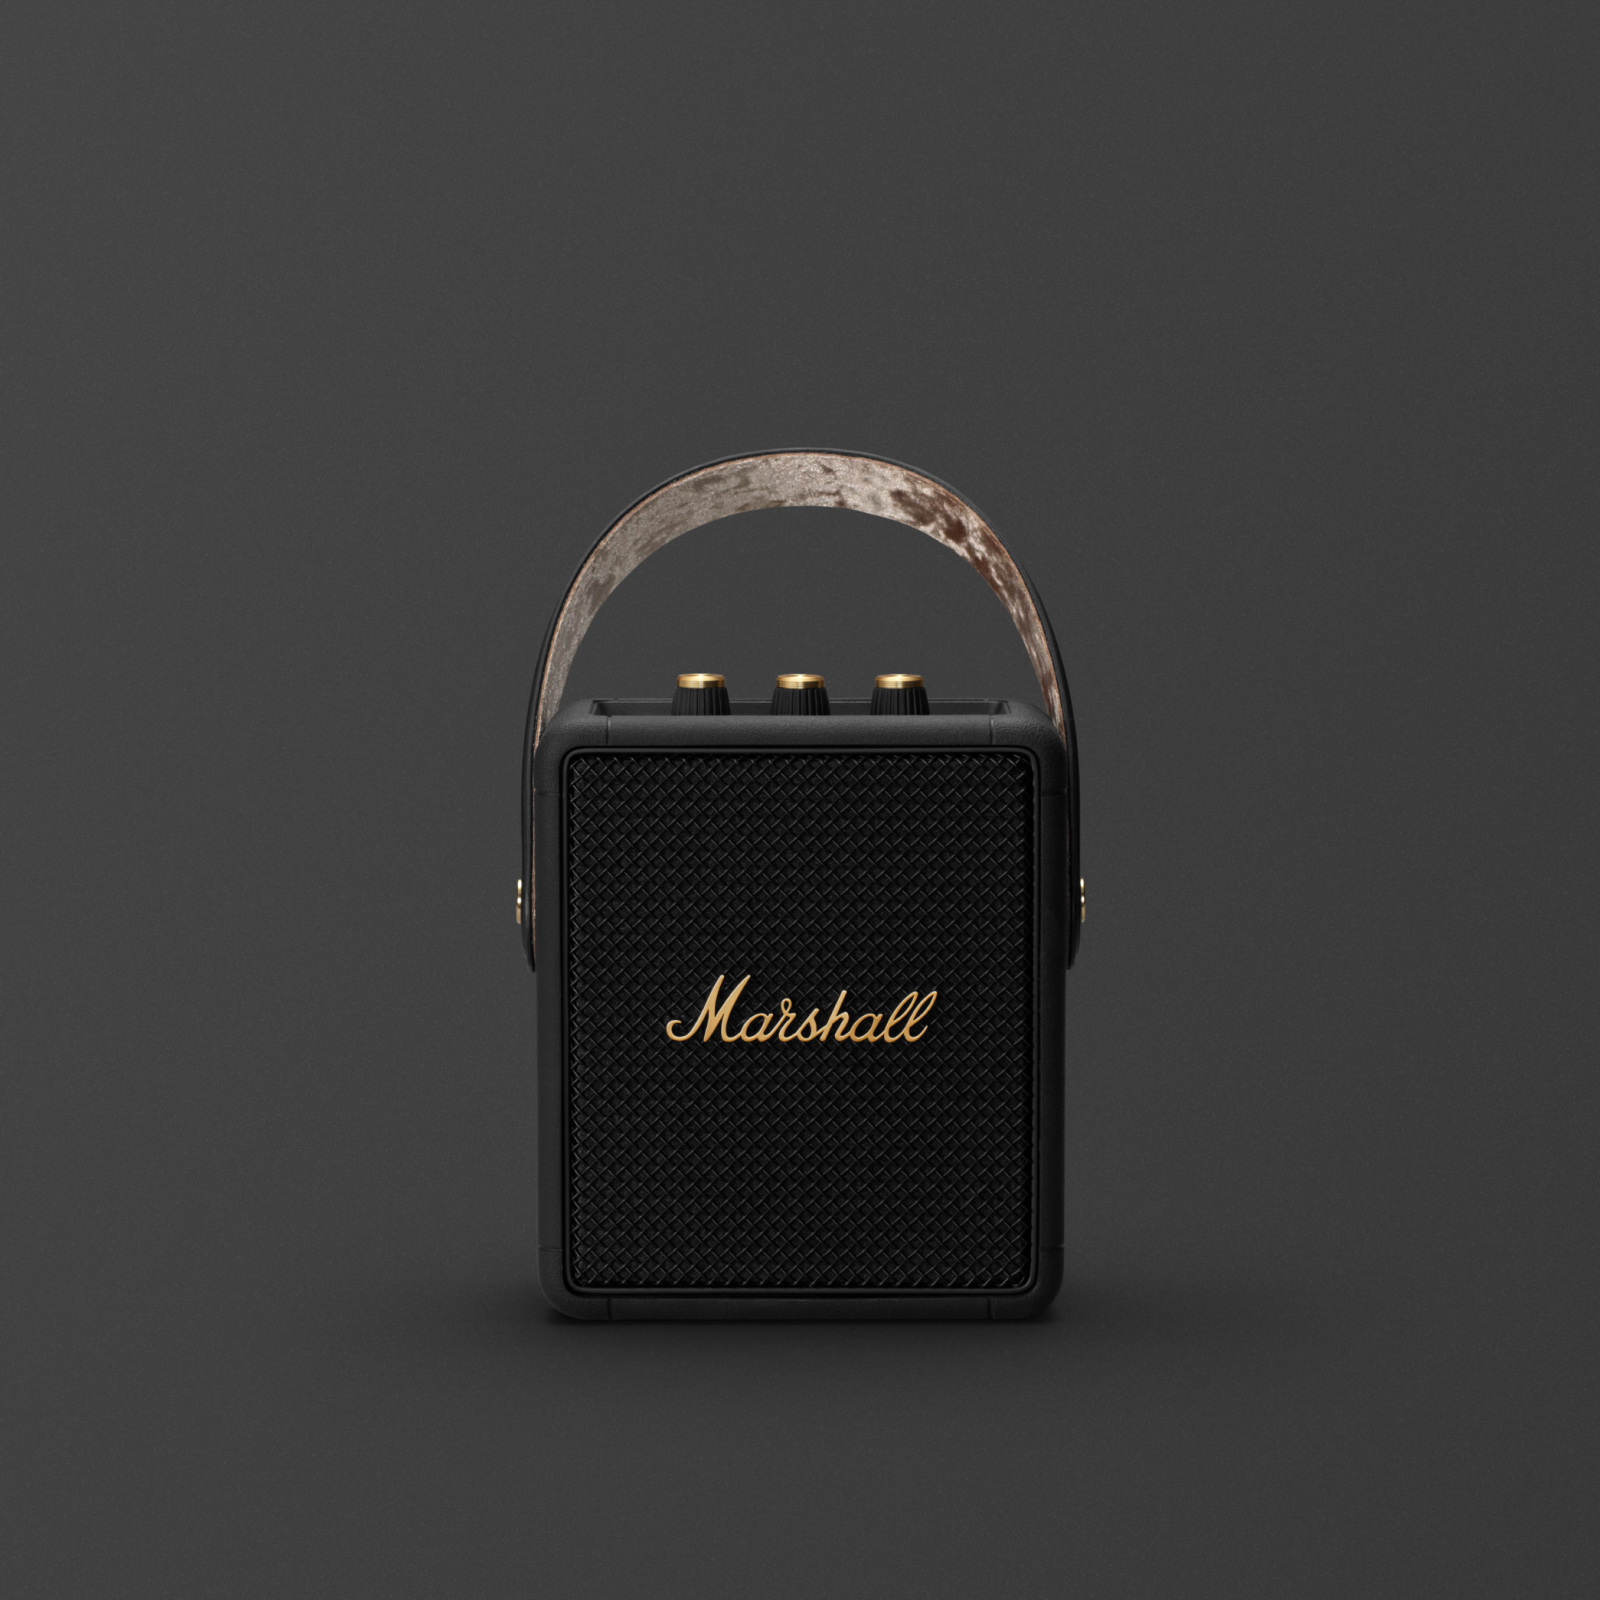 Bluetooth speakers for powerful sound wherever you go | Marshall.com